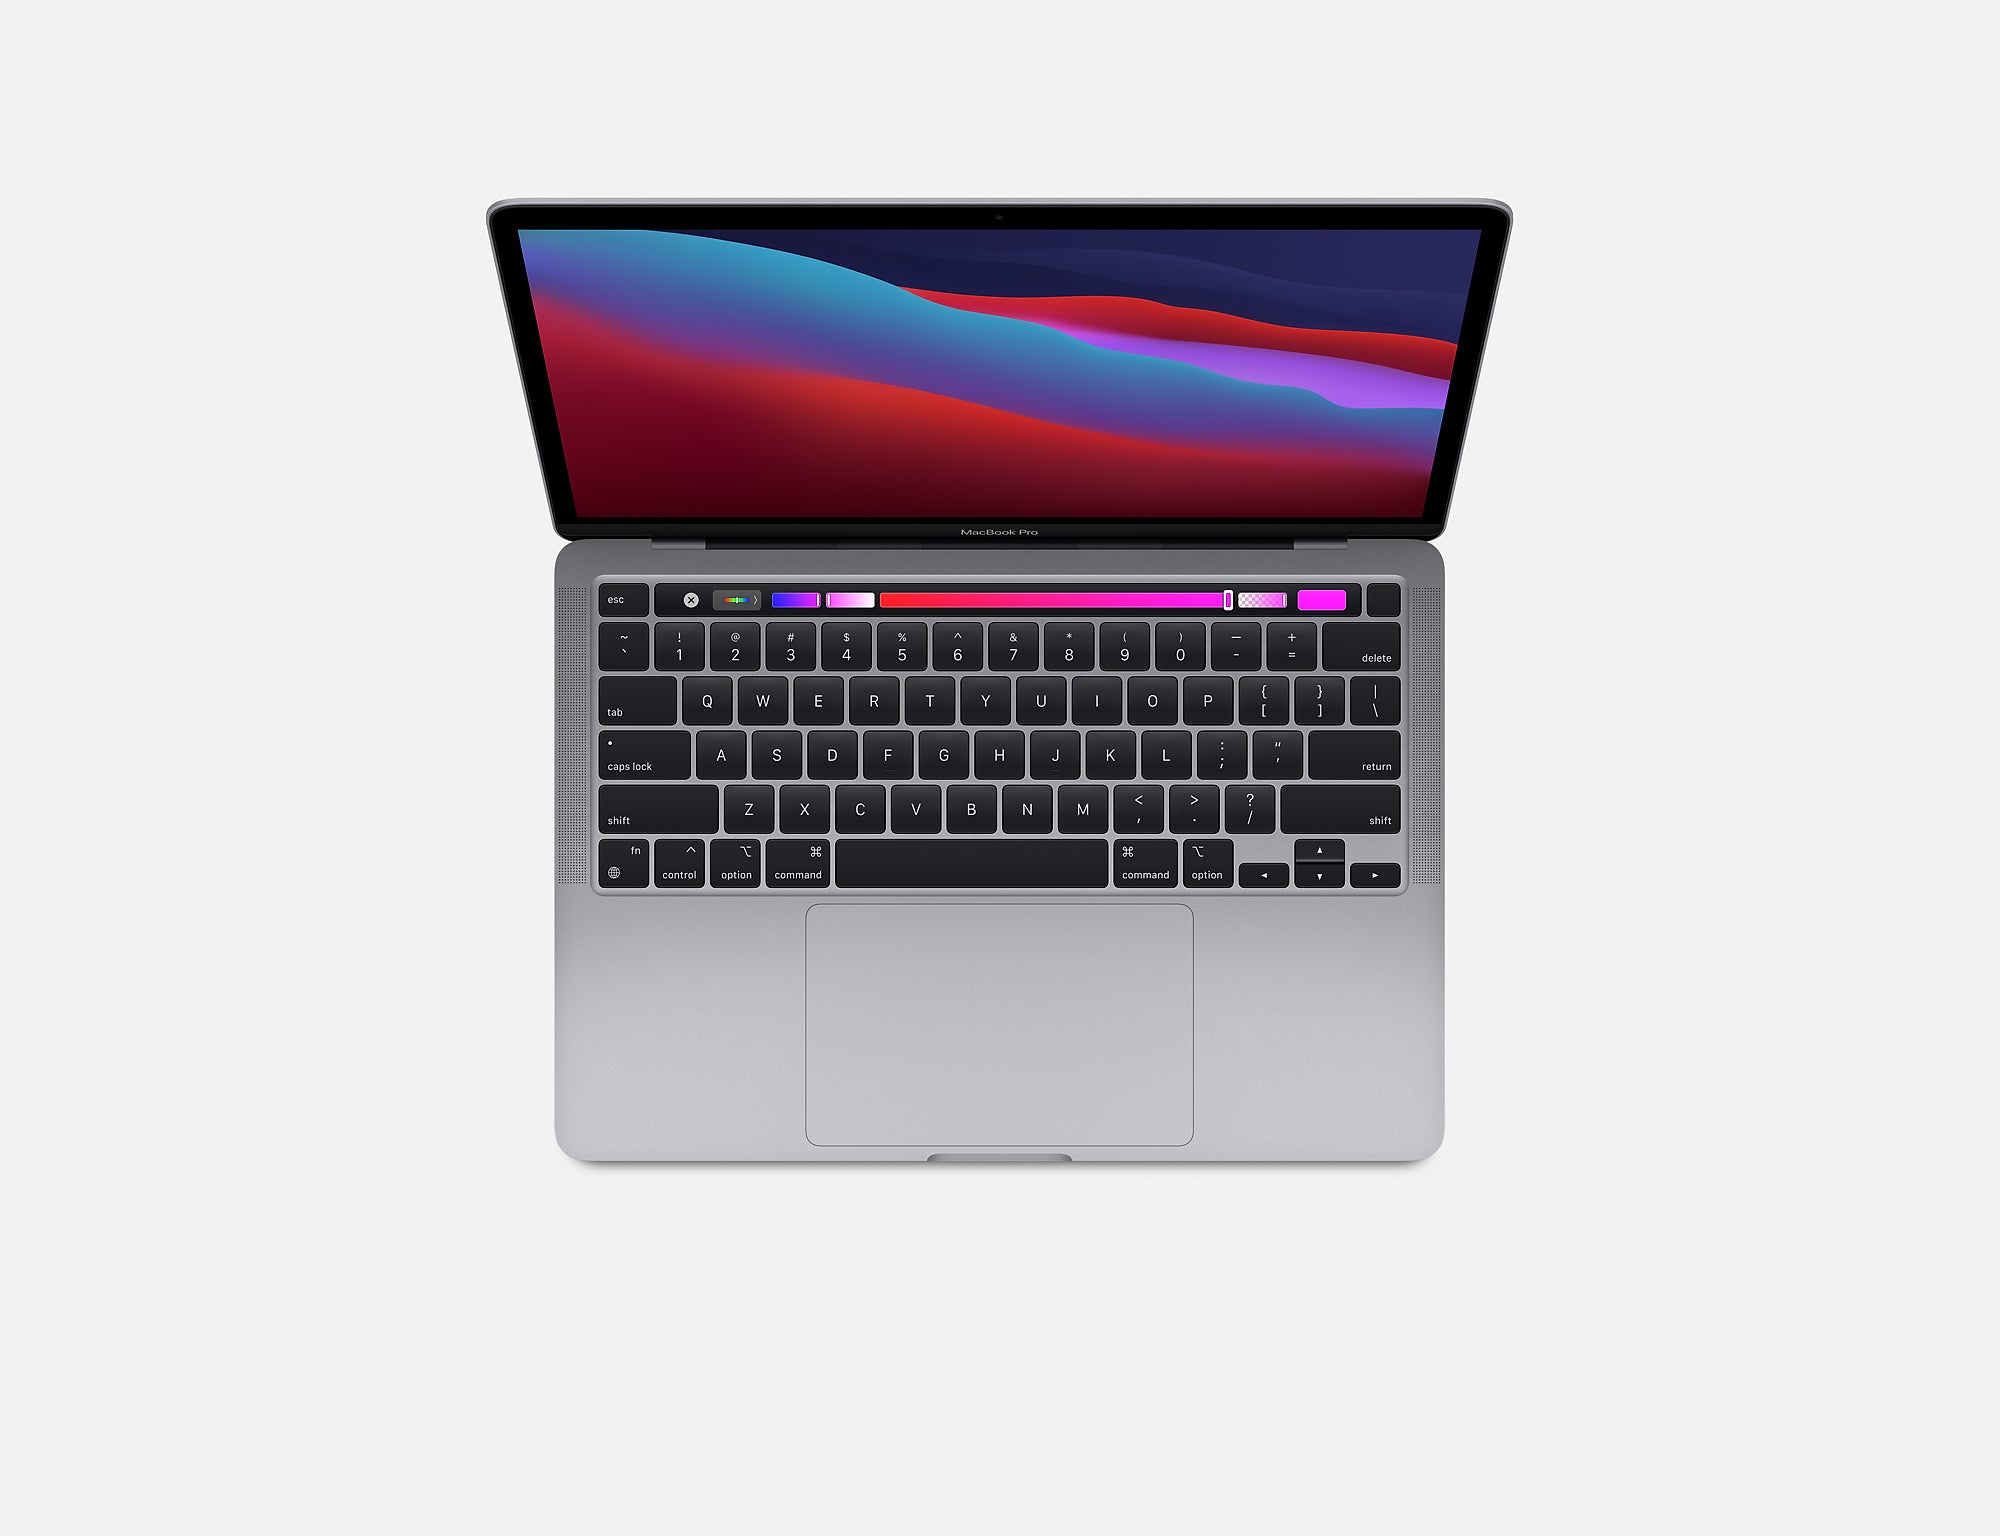 MacBook Pro M1 13-inch, M1, 2020 1TB